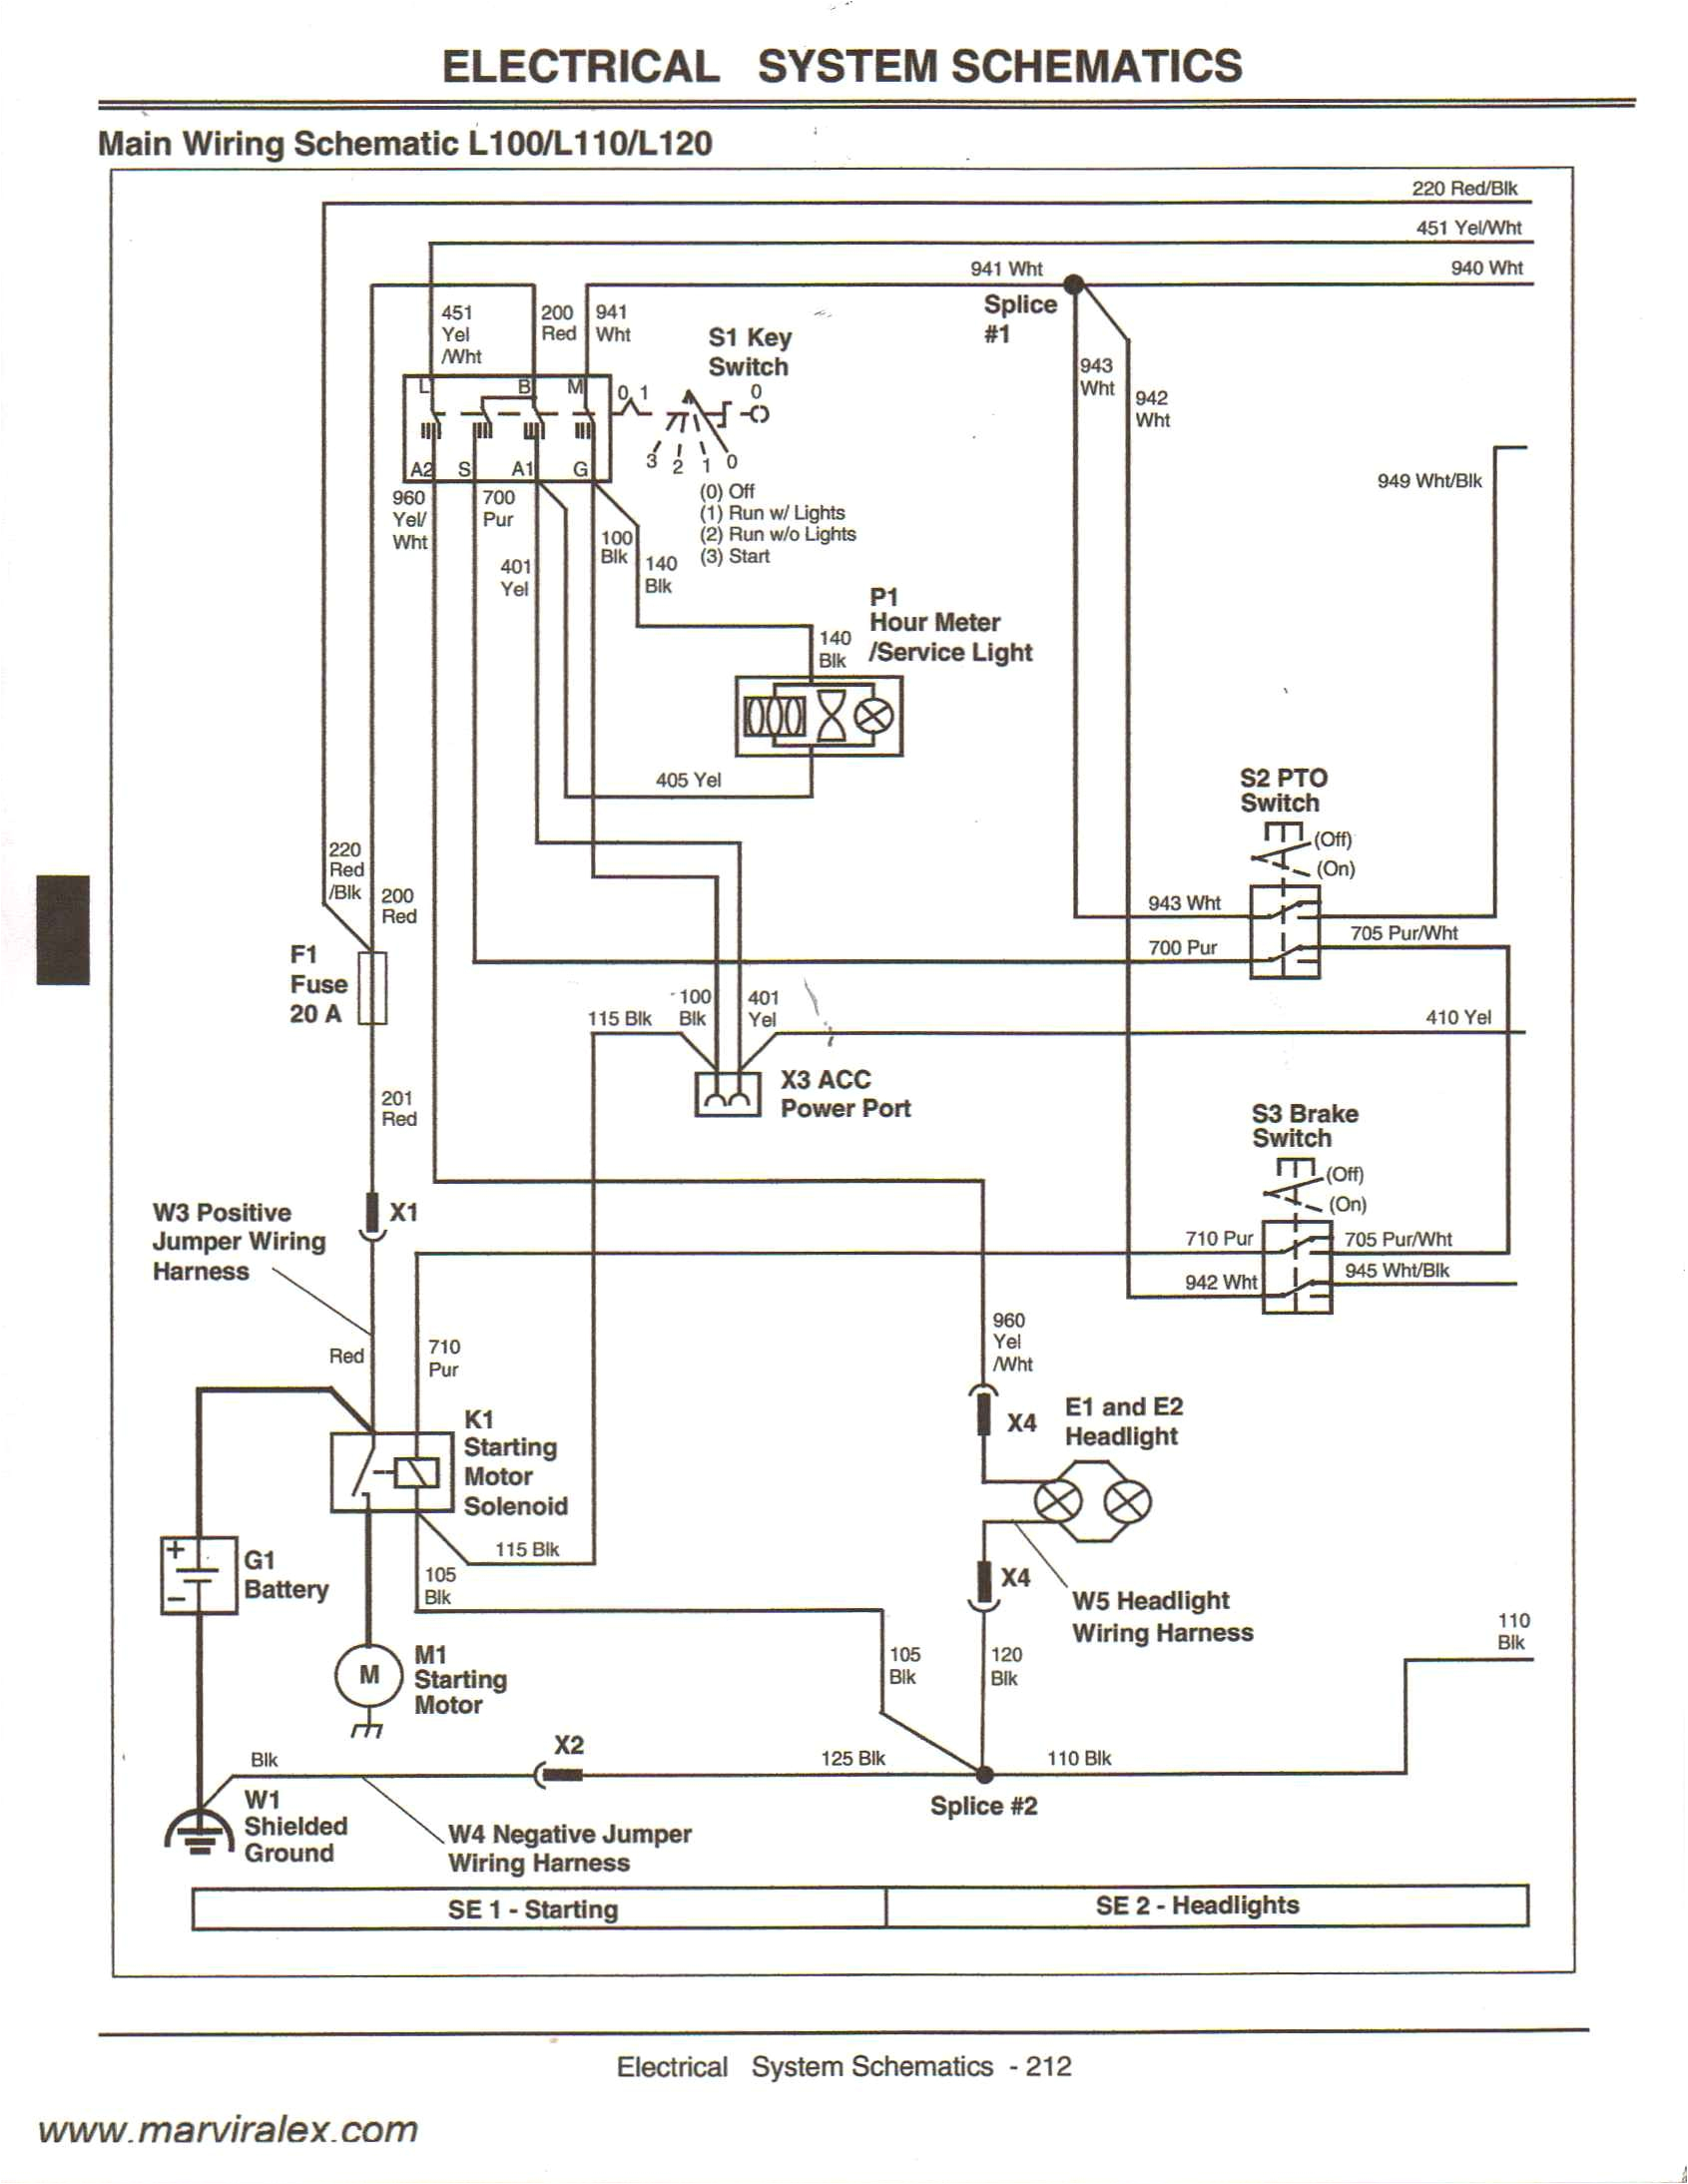 john deere l120 electrical schematic blog wiring diagram john deere l120 wiring harness diagram moreover john deere l120 pto